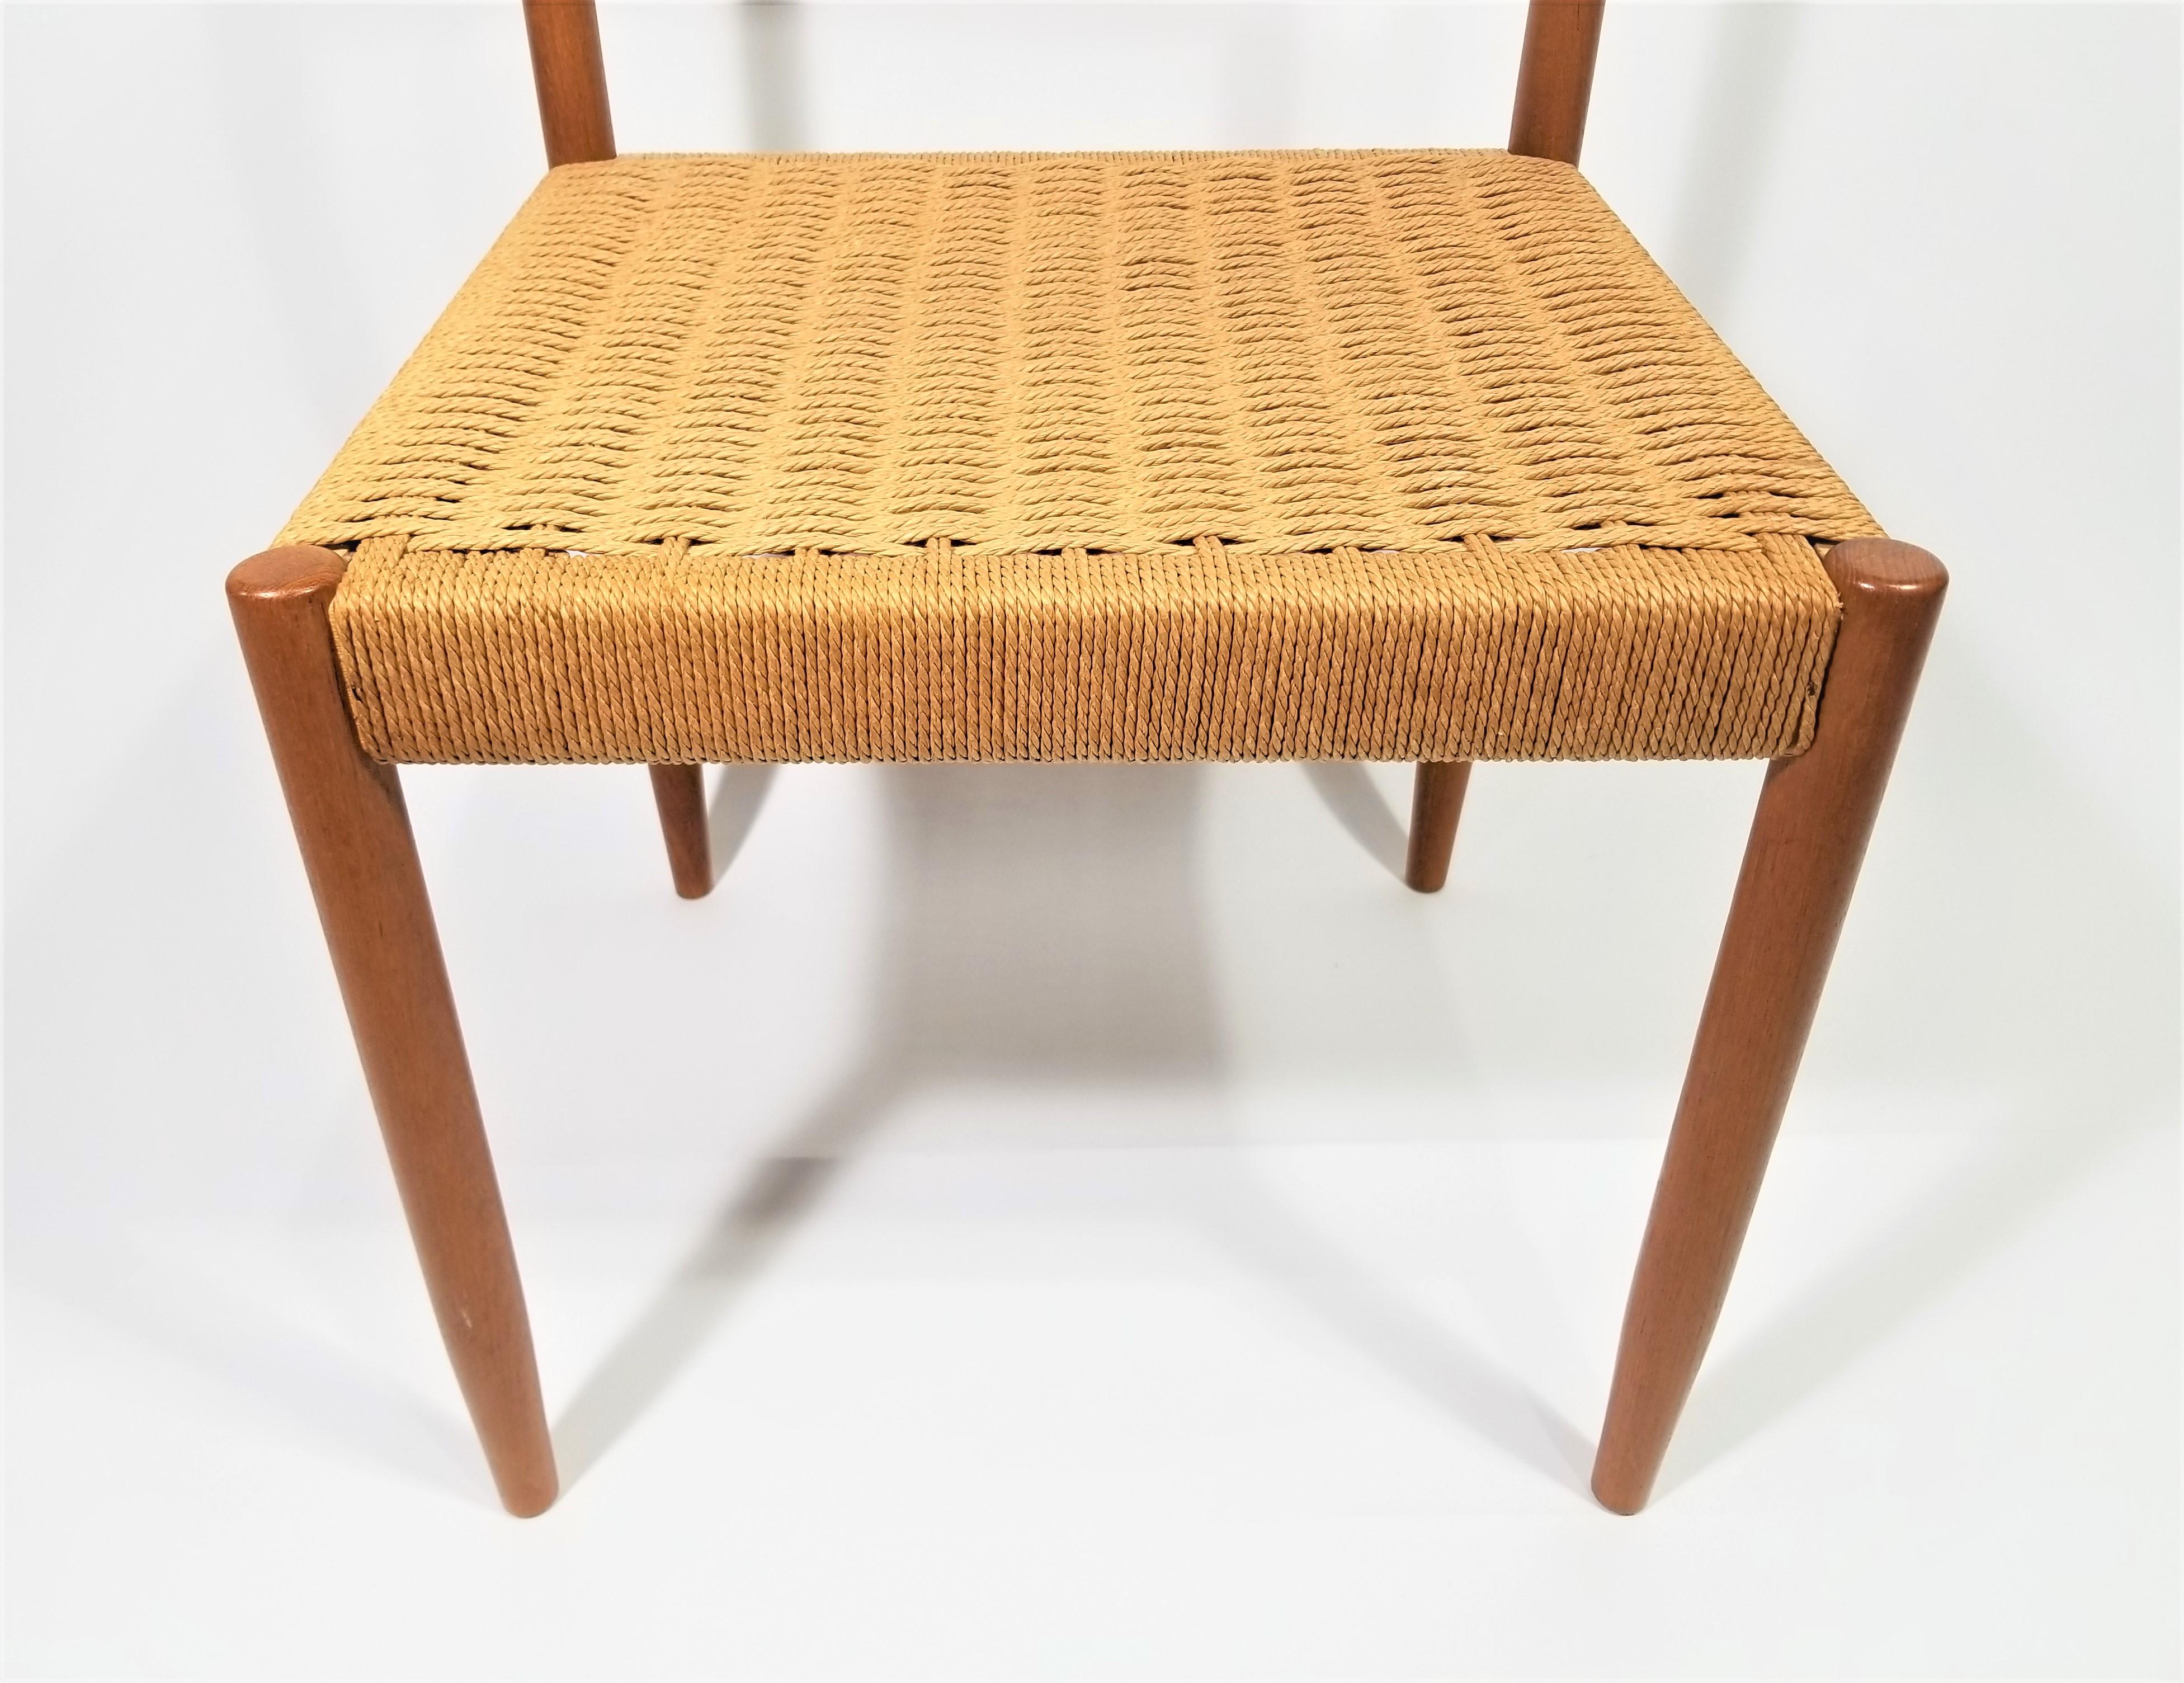 Poul Volther for Frem Rojle Danish Teak Woven Chair Midcentury 1960s  For Sale 2